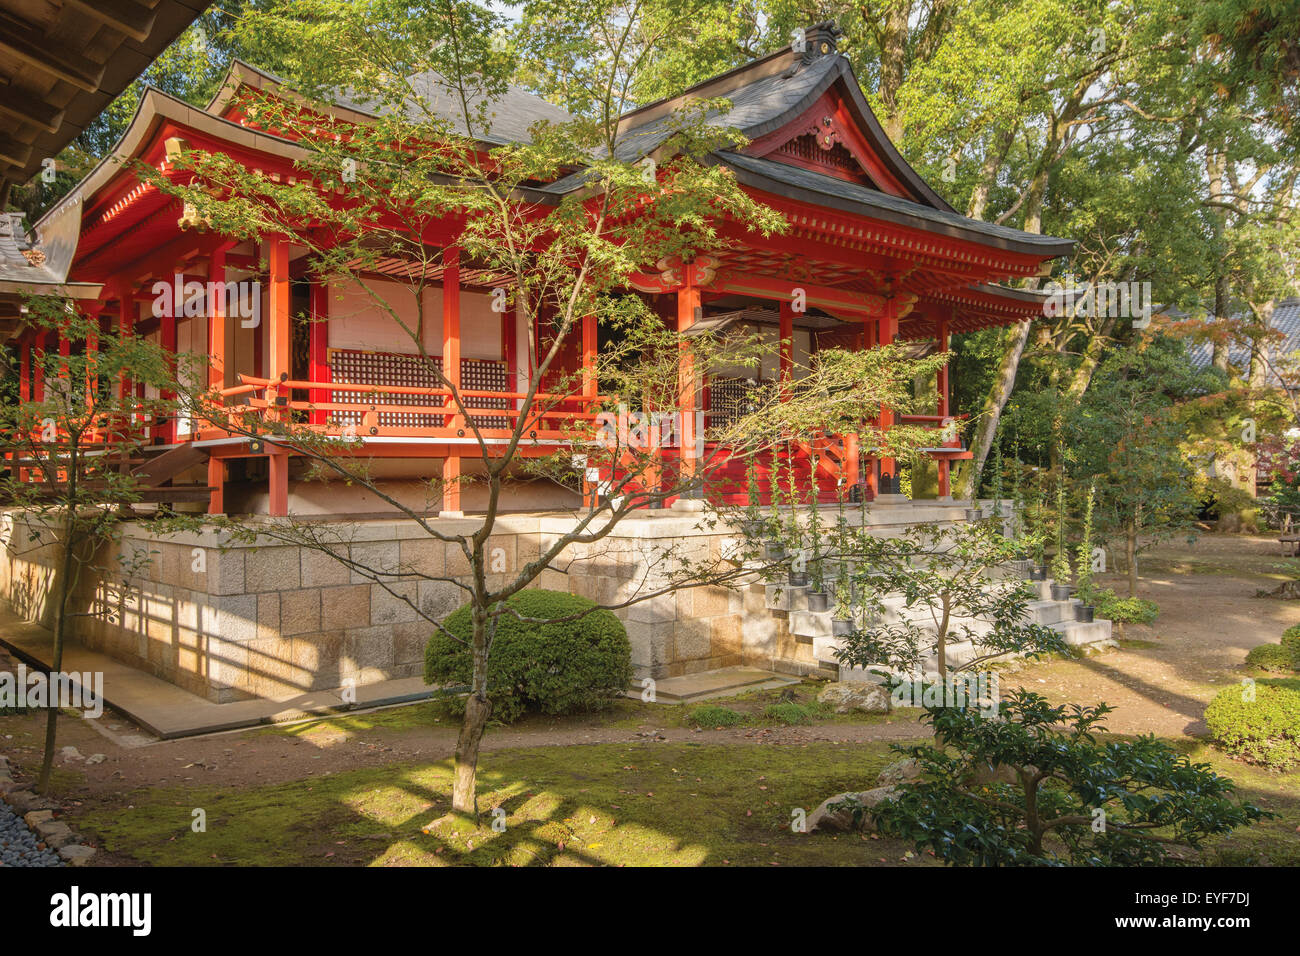 Red tempio giapponese edificio e giardino; Arashiyama, Kyoto, Giappone Foto Stock